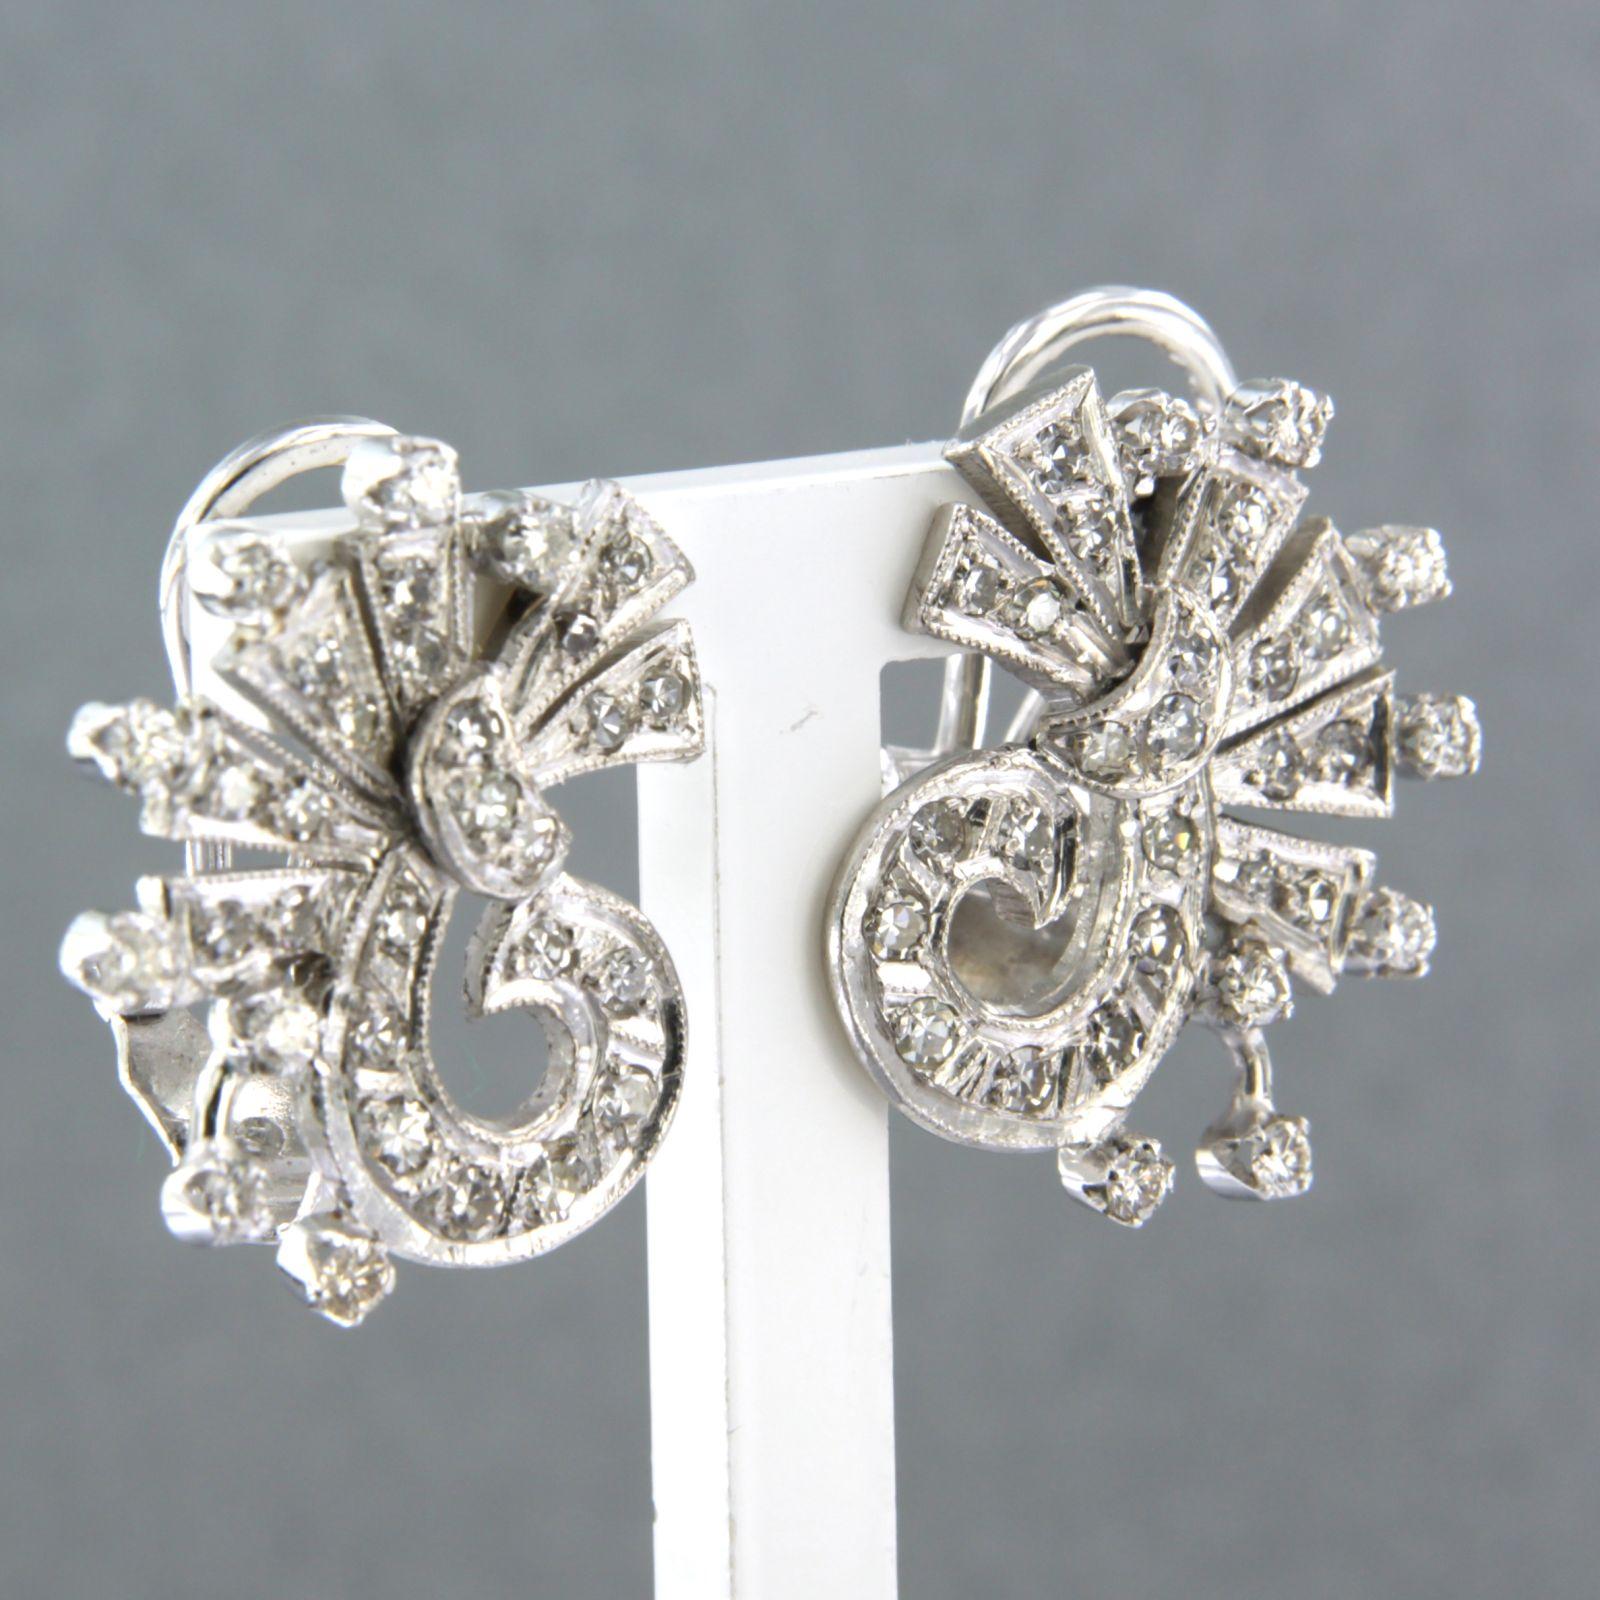 Art Nouveau Earrings set with diamonds 14k white gold For Sale